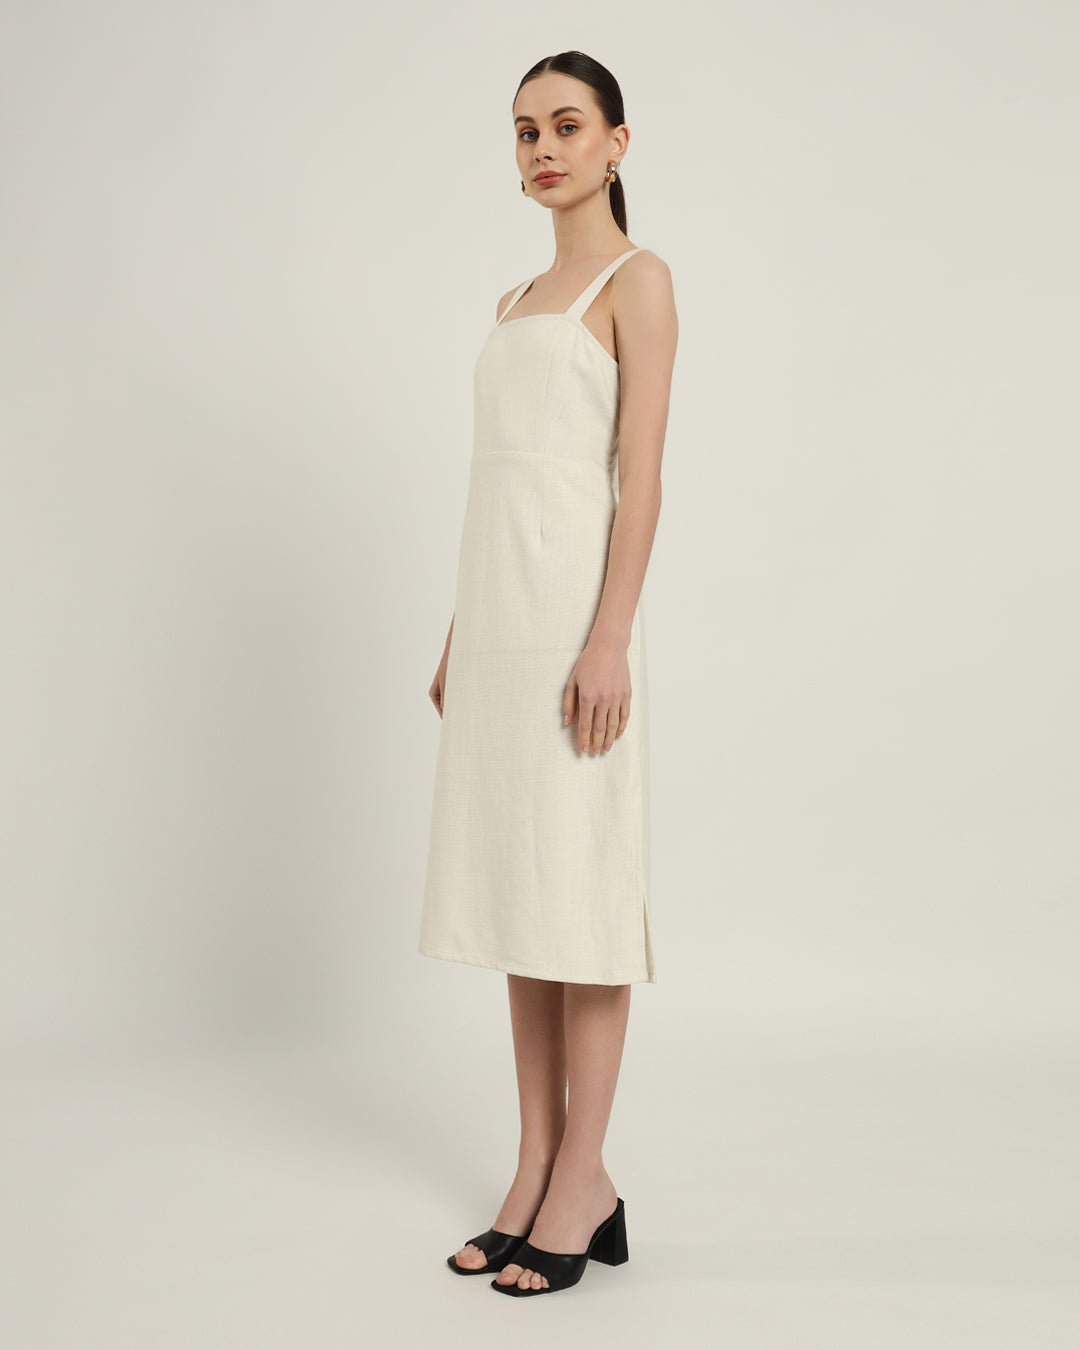 The Samara Daisy White Linen Dress